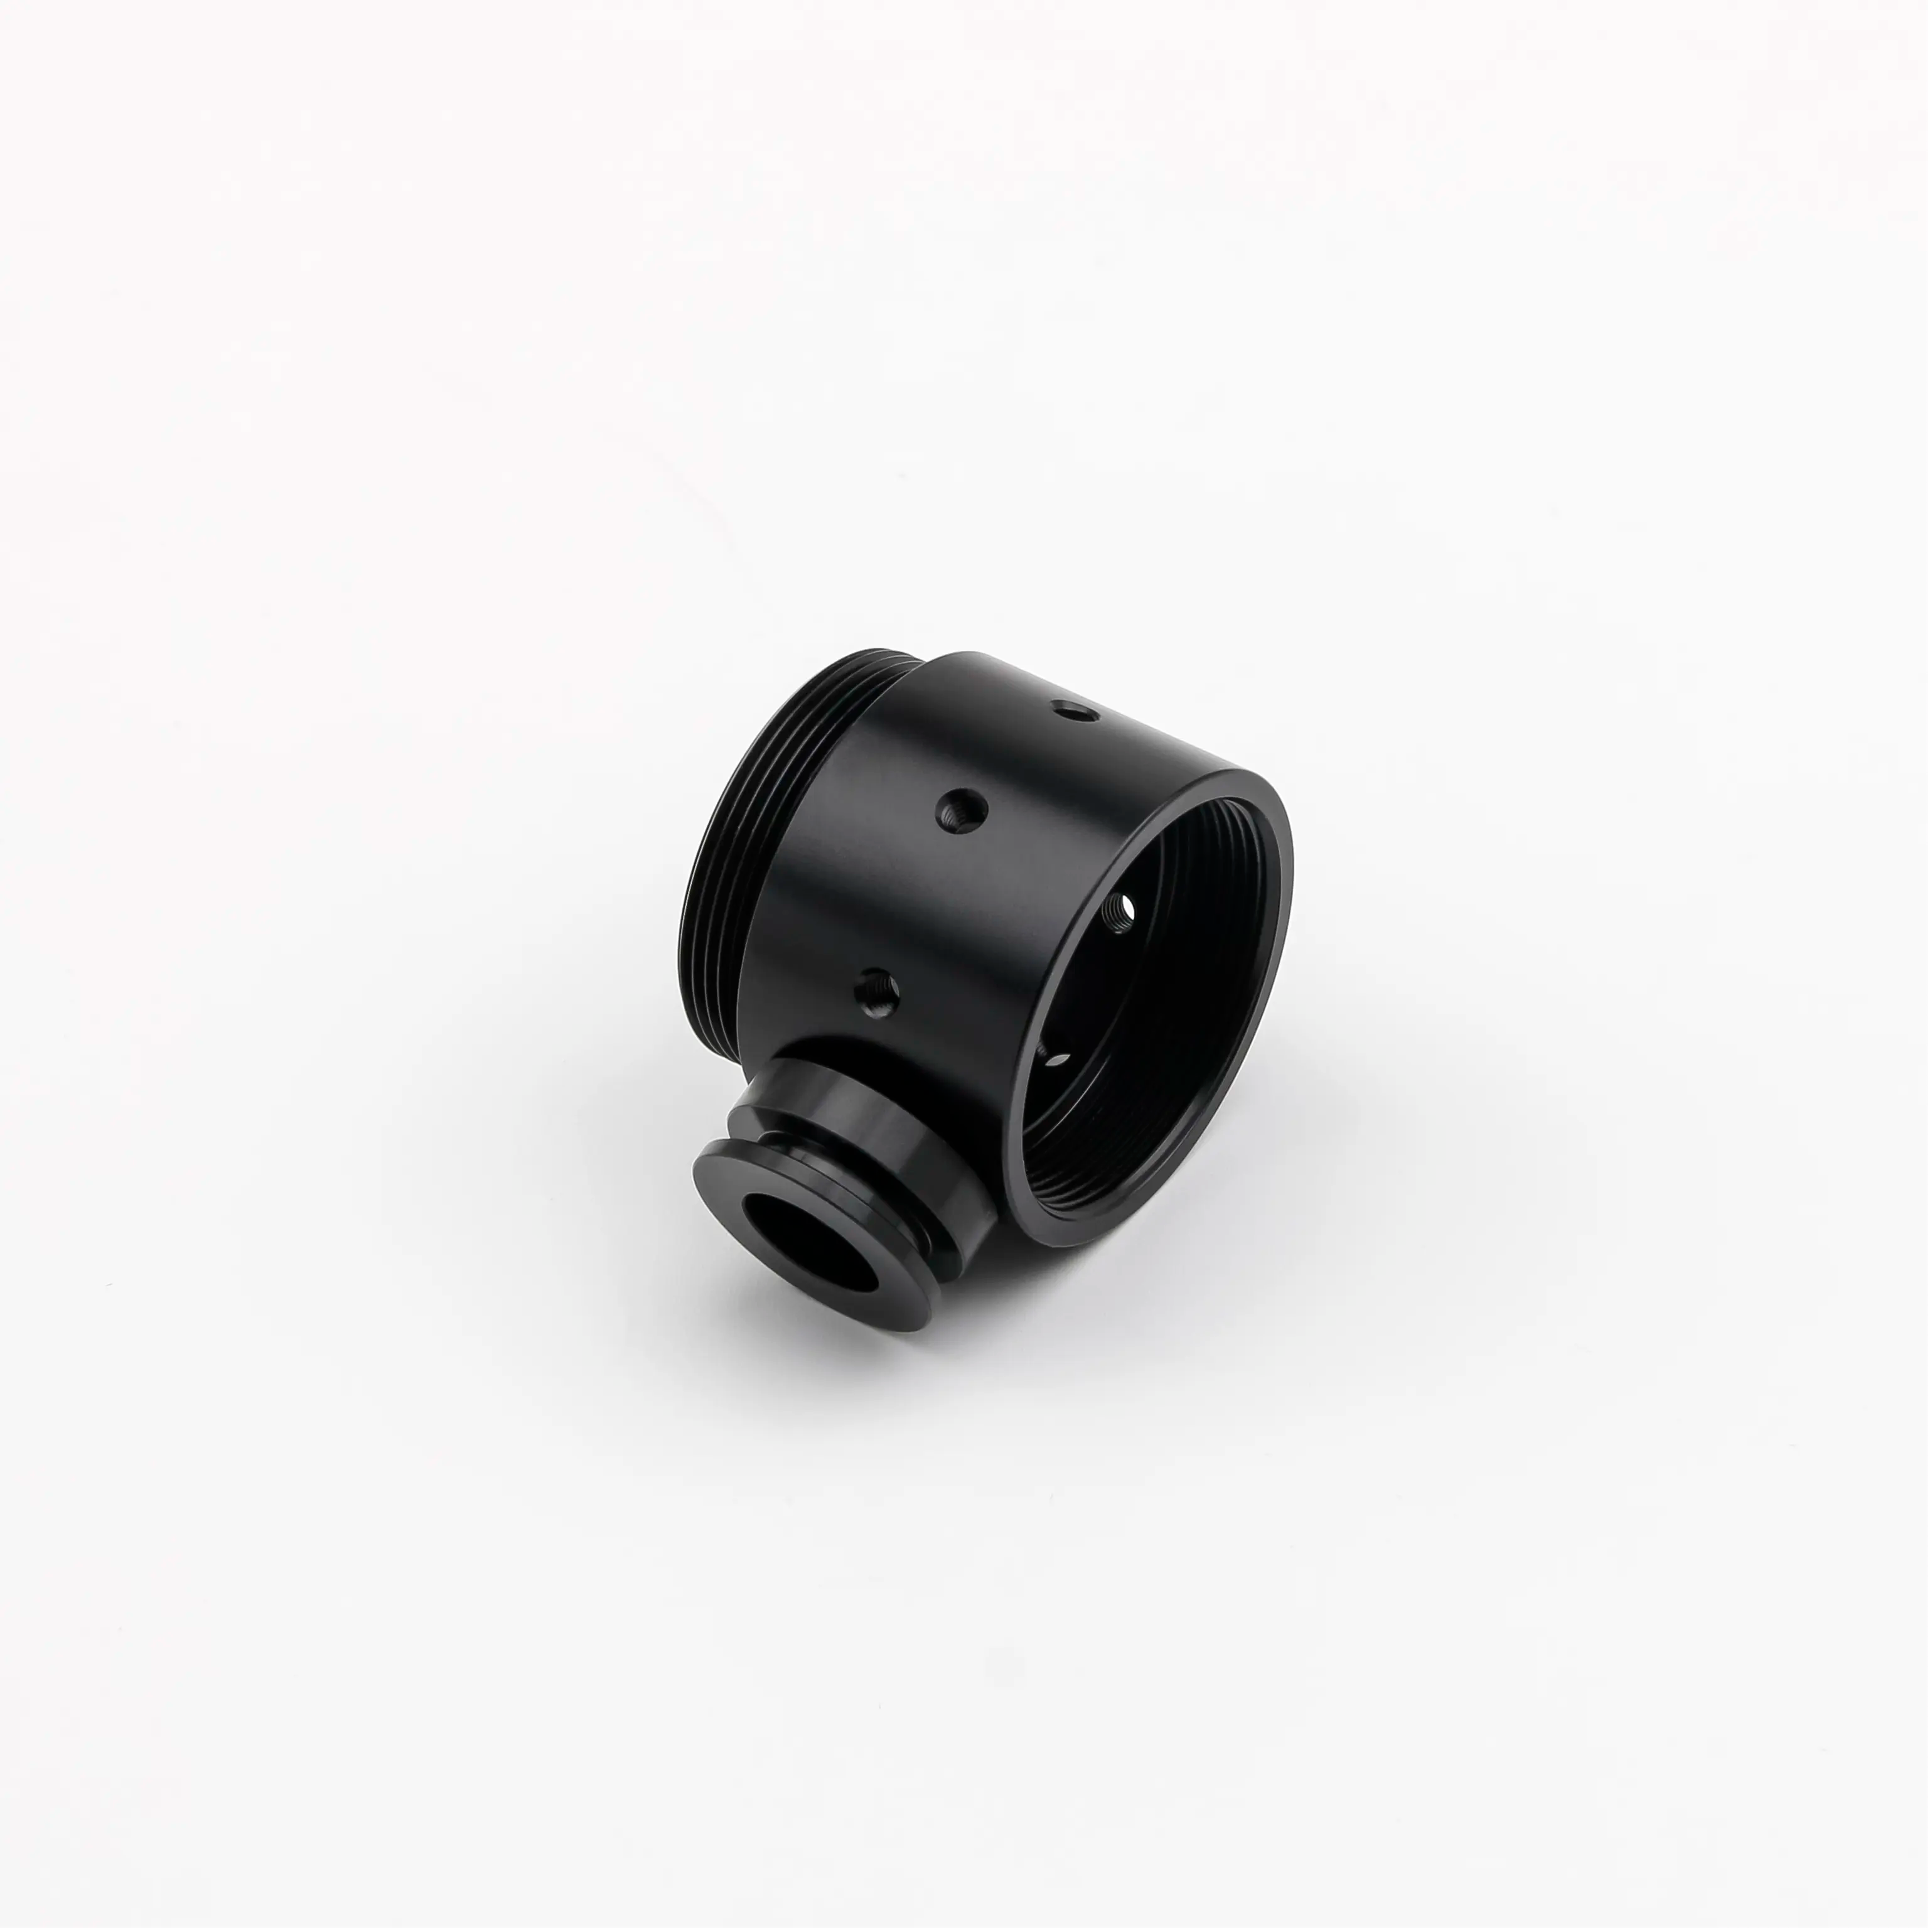 Covertec wheel clip - Black color